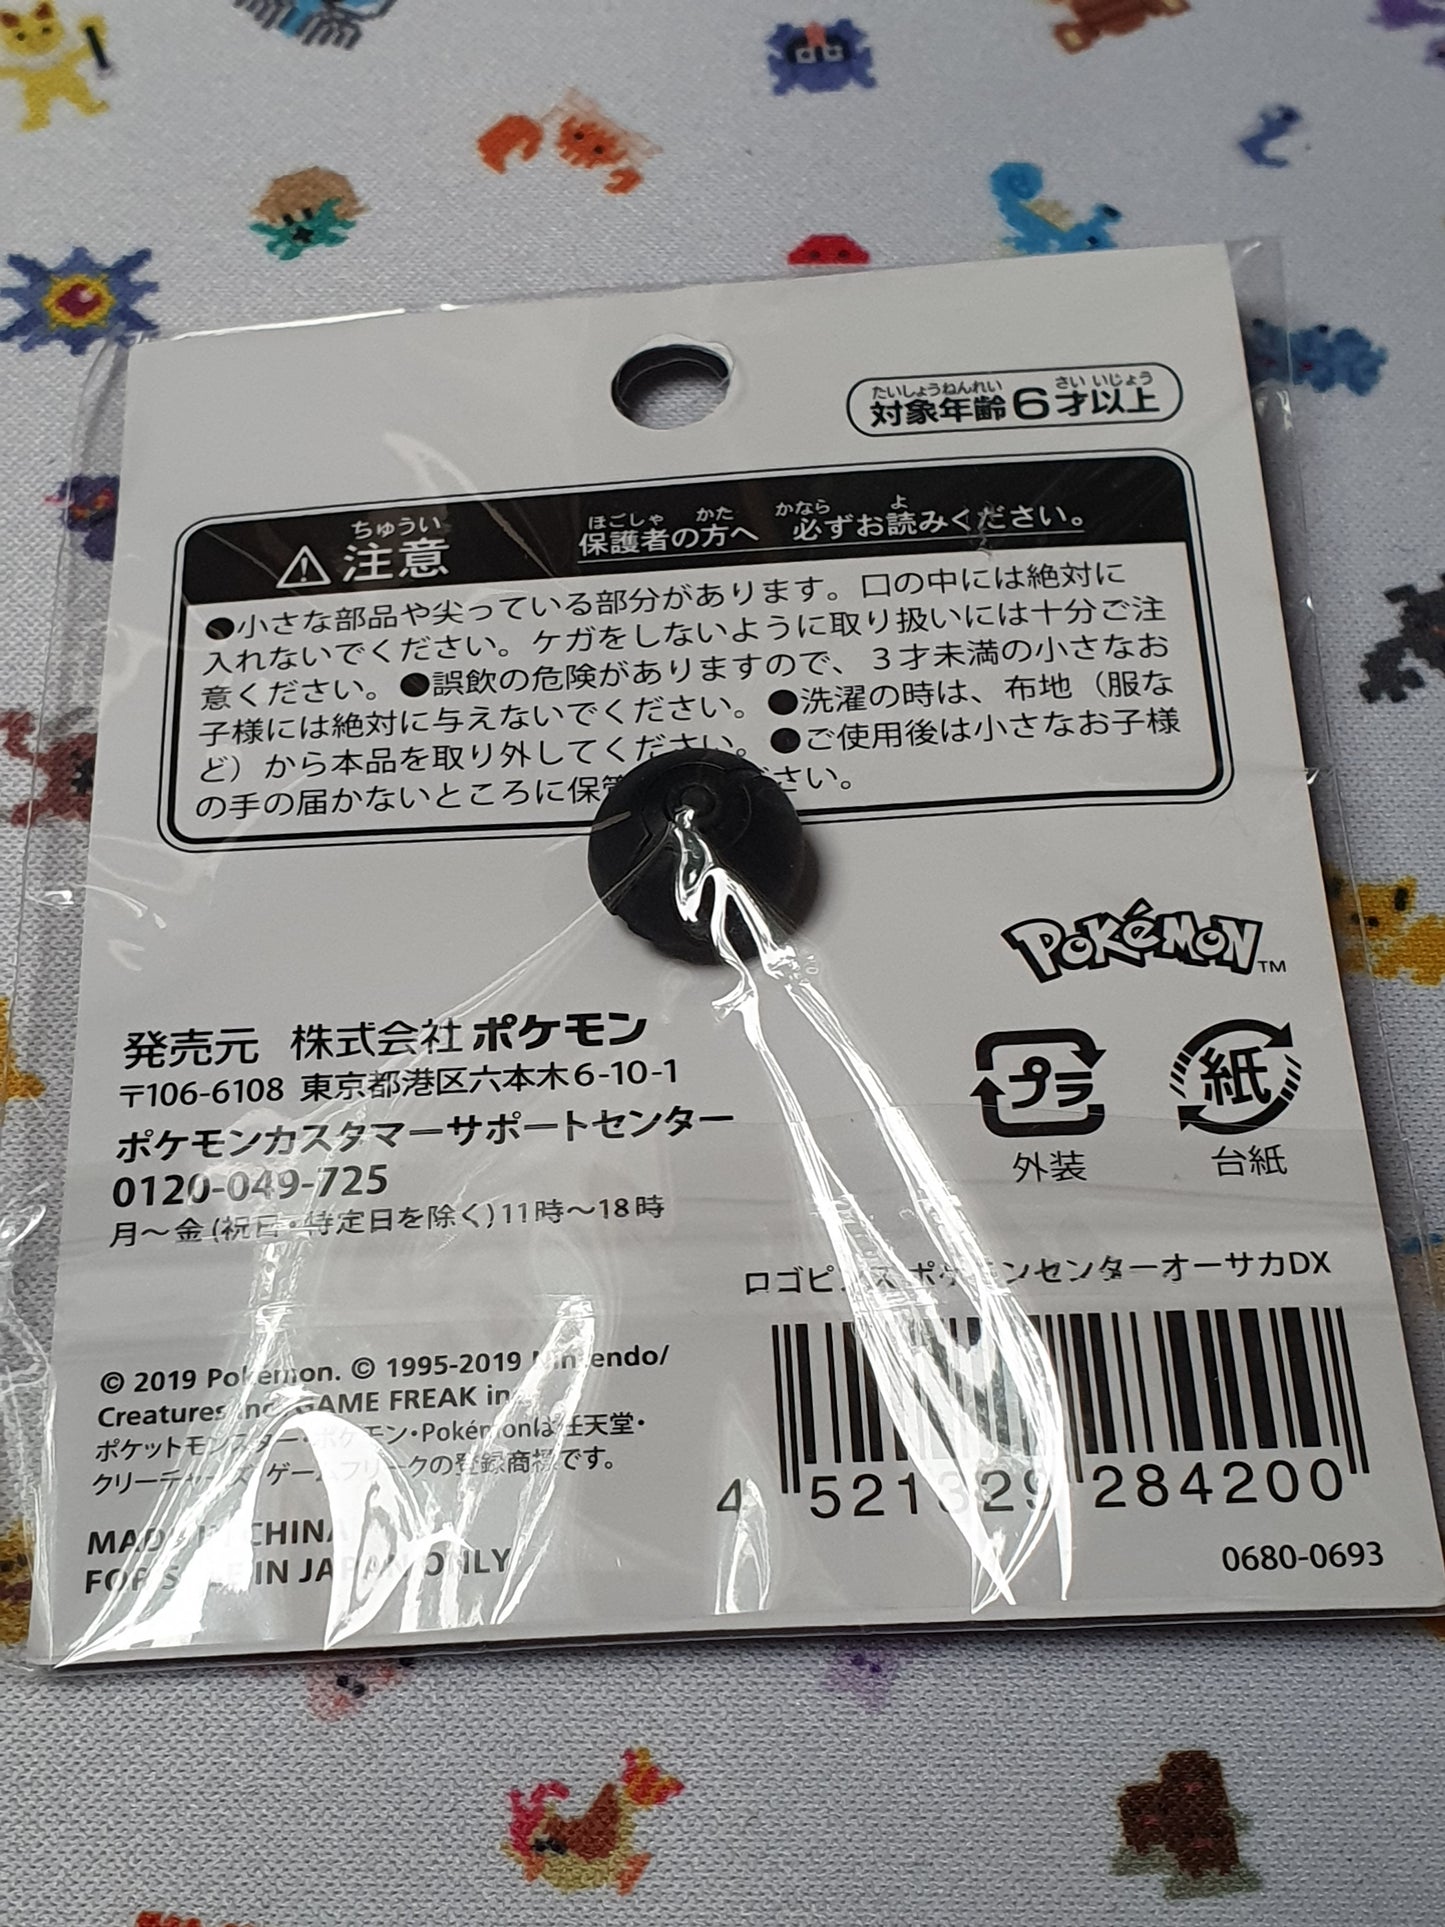 Pokémon Center Osaka DX Official Exclusive Pin Badge